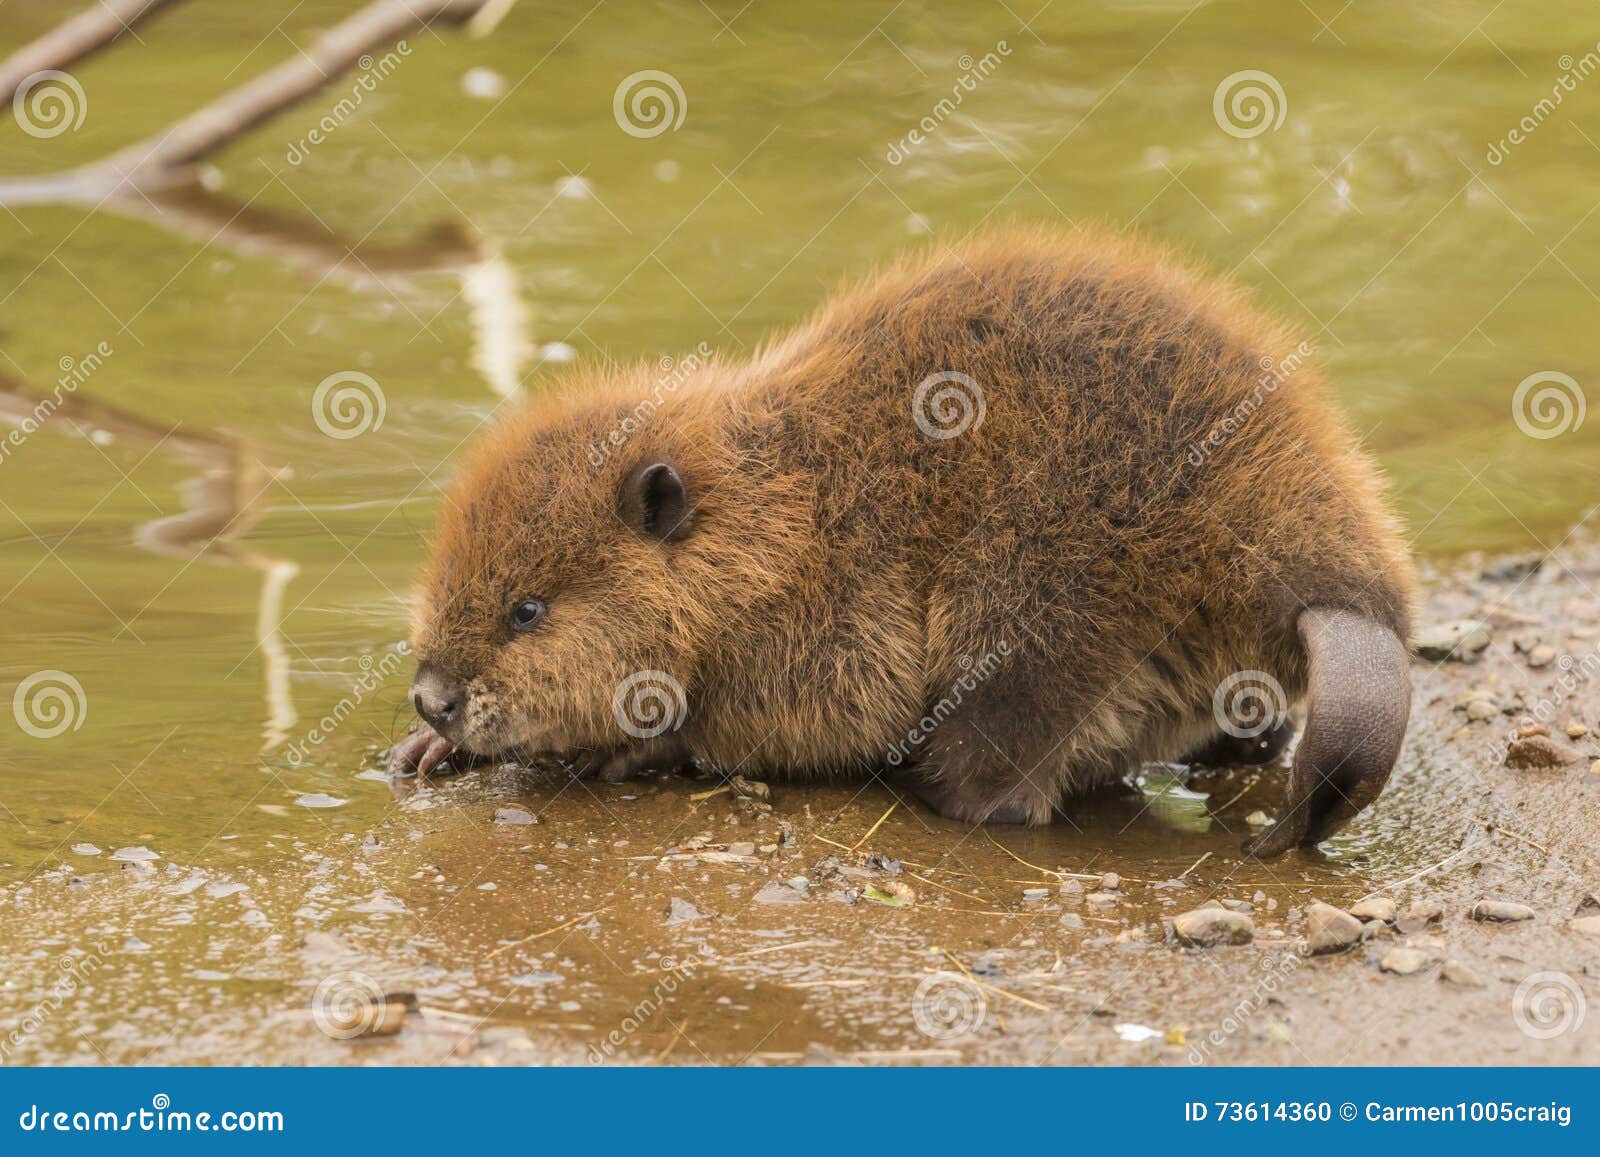 young beaver pics